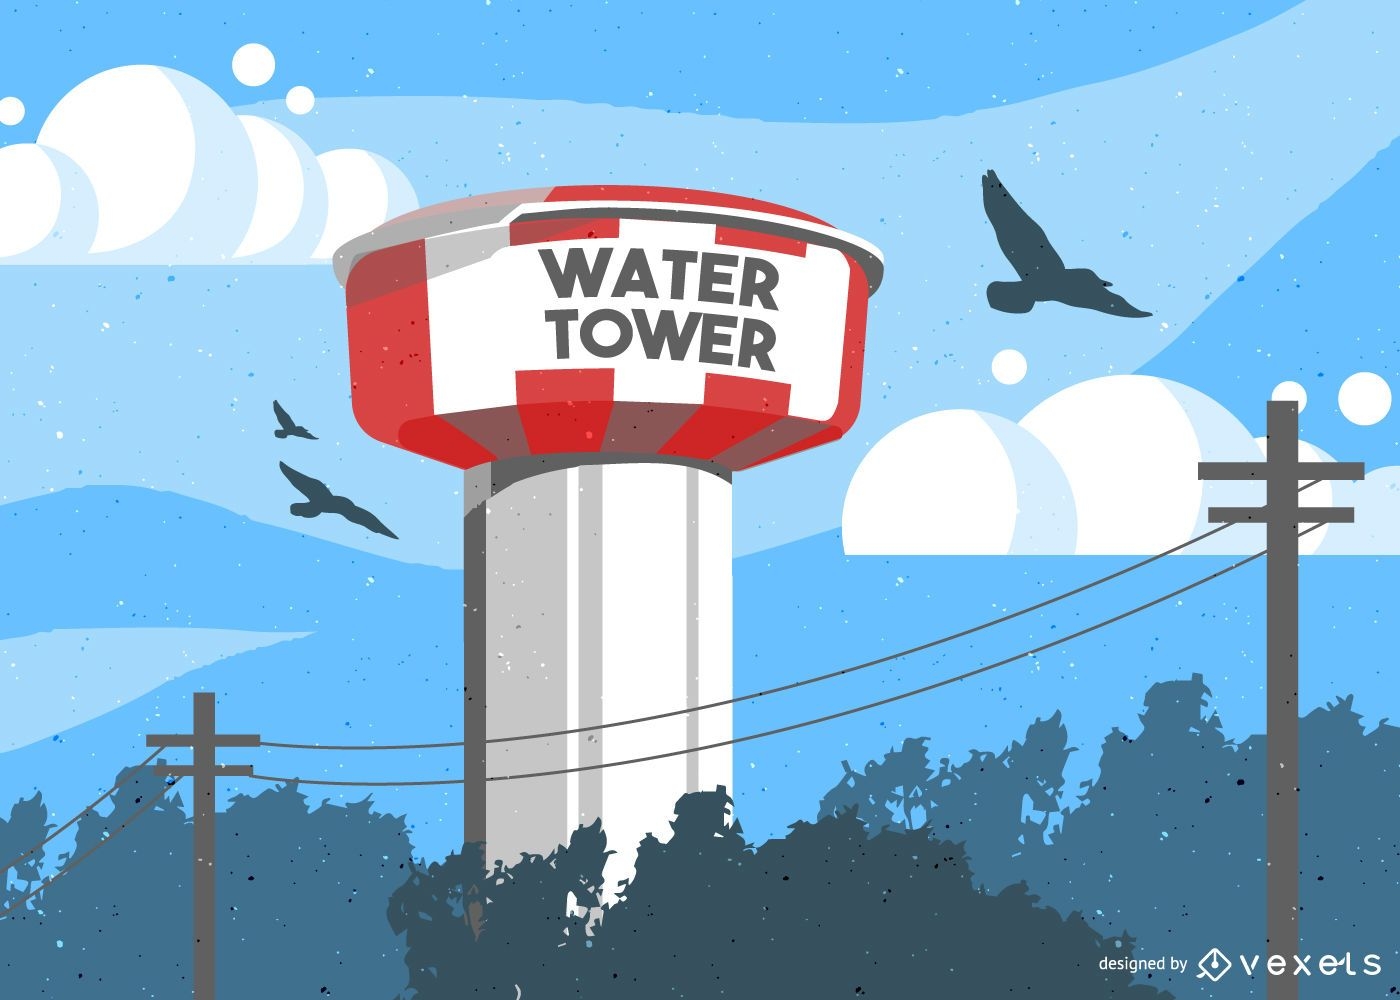 Water Tower Tank Illustration